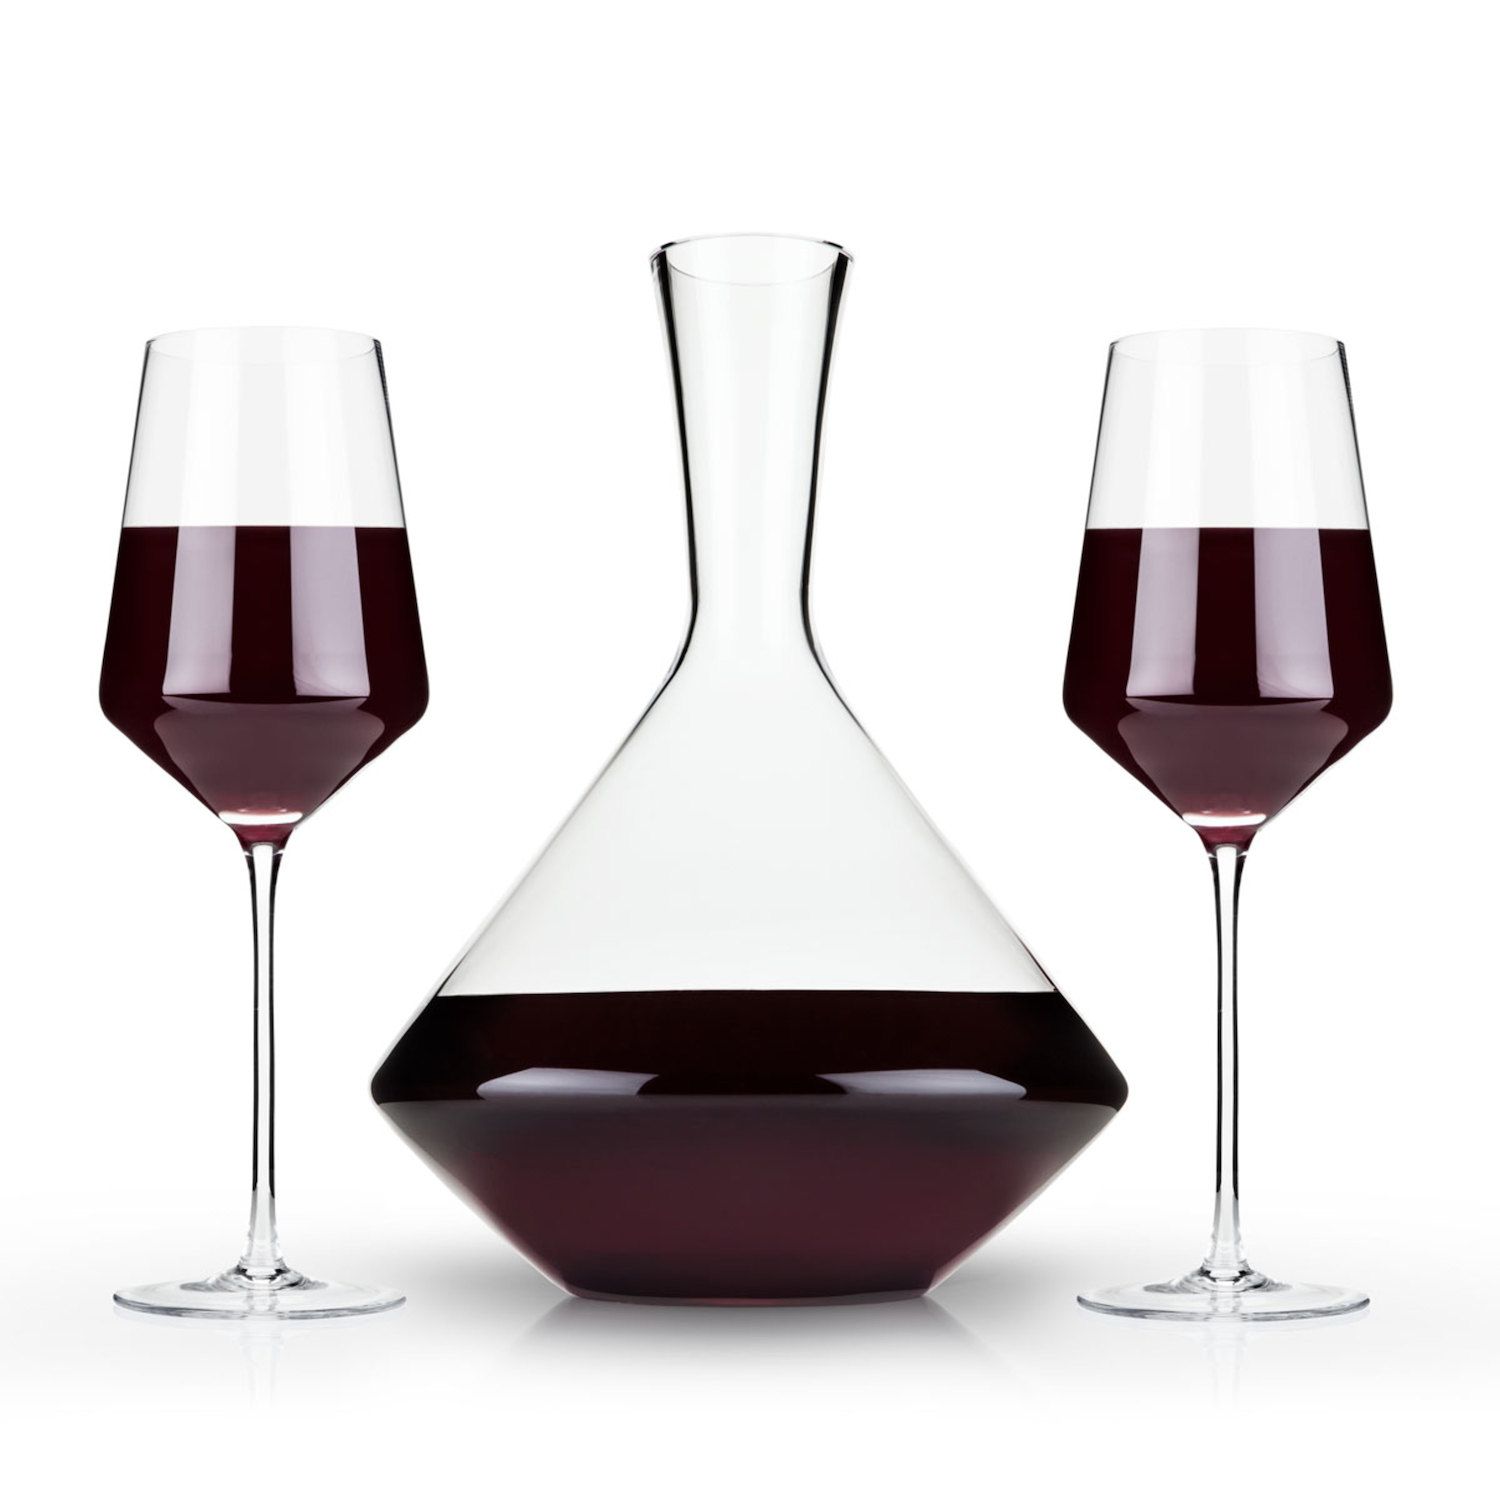 Reserve Nouveau Amber-Colored 22oz Wine Glasses by Viski (Set of 2)